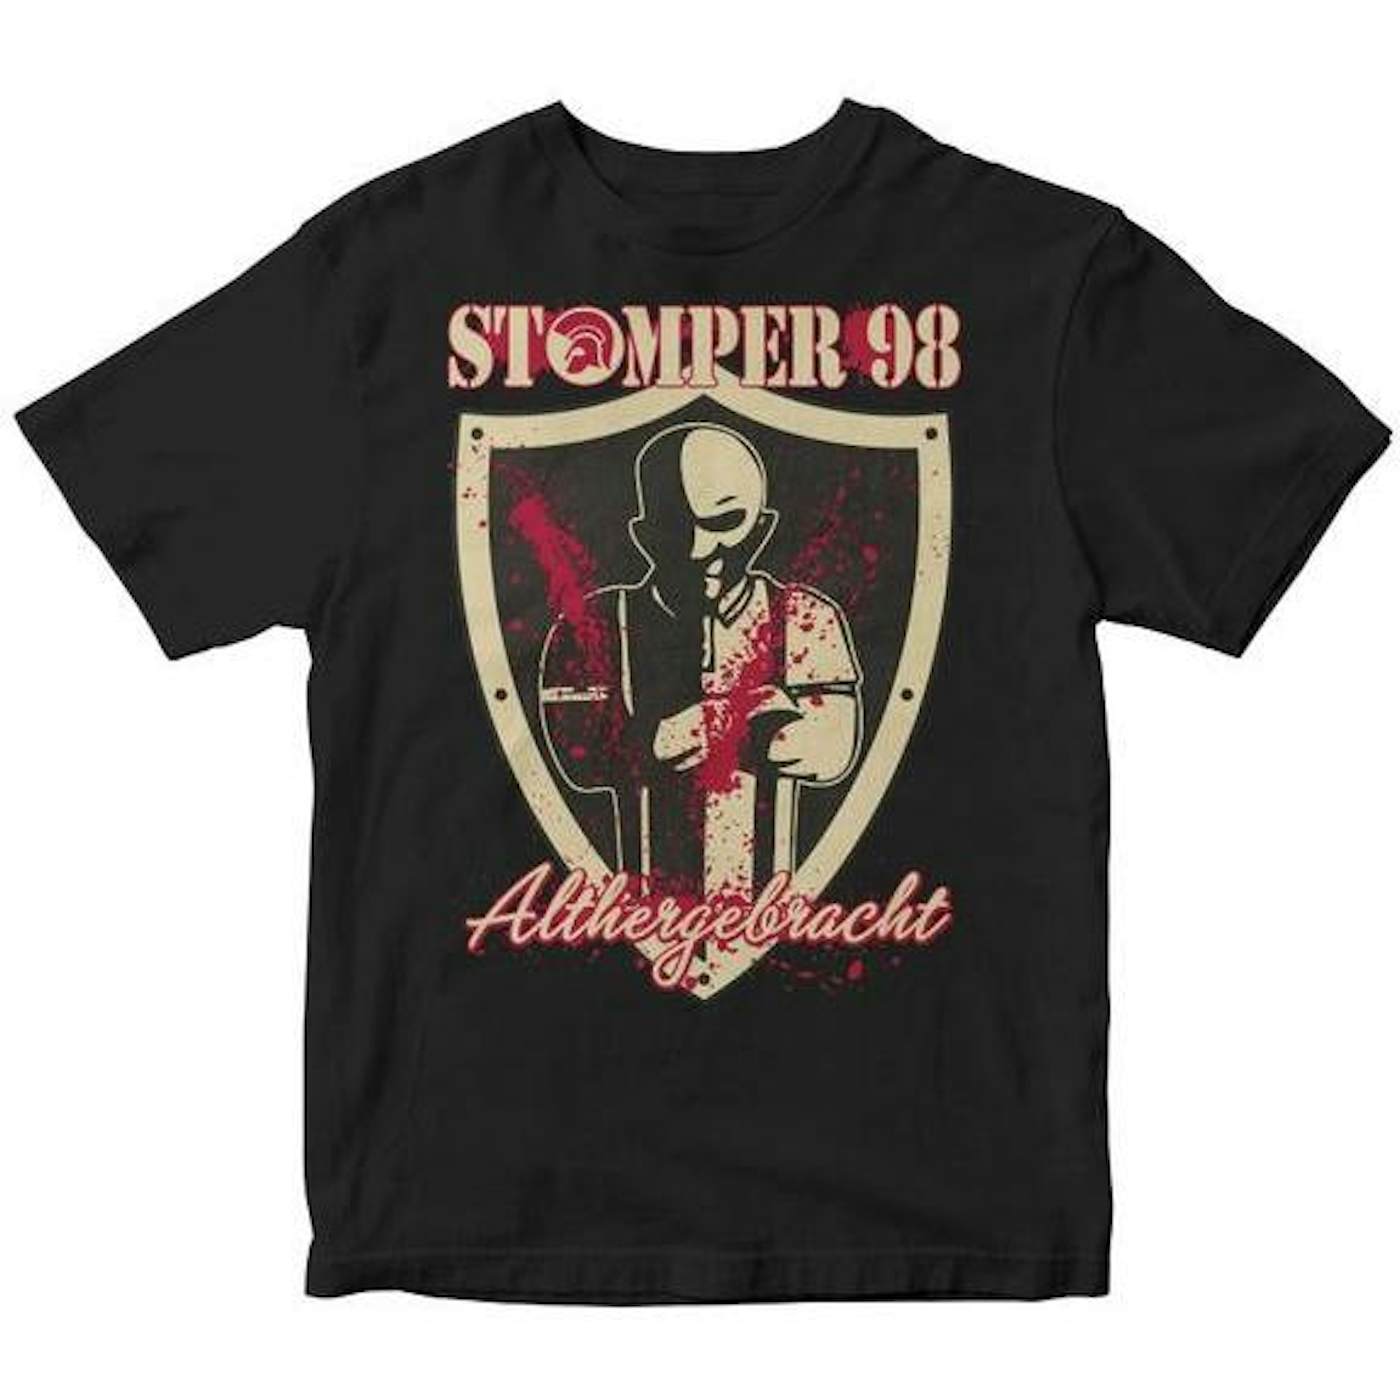 Stomper 98 - Althergebracht - T-Shirt